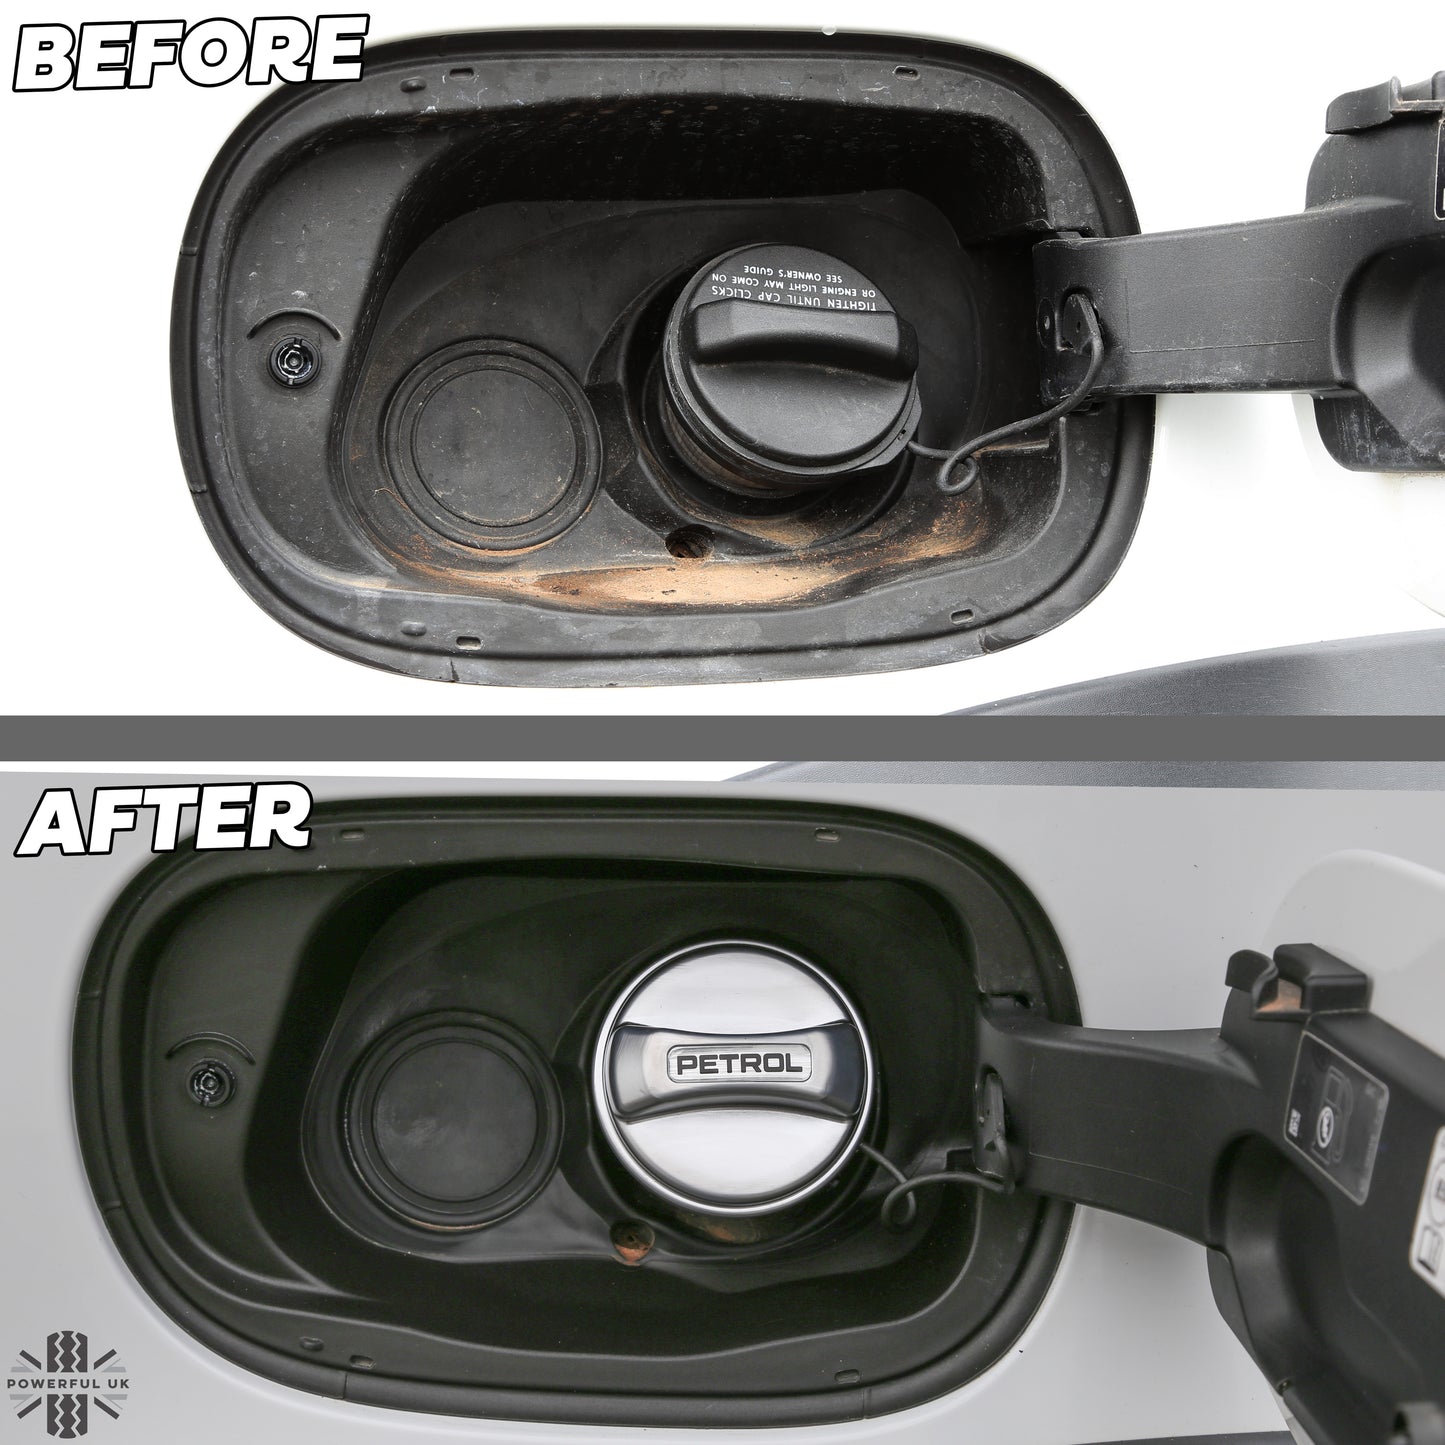 Fuel Filler Cap Cover - Petrol (Vented) - Silver - for Jaguar XJ (2010+)